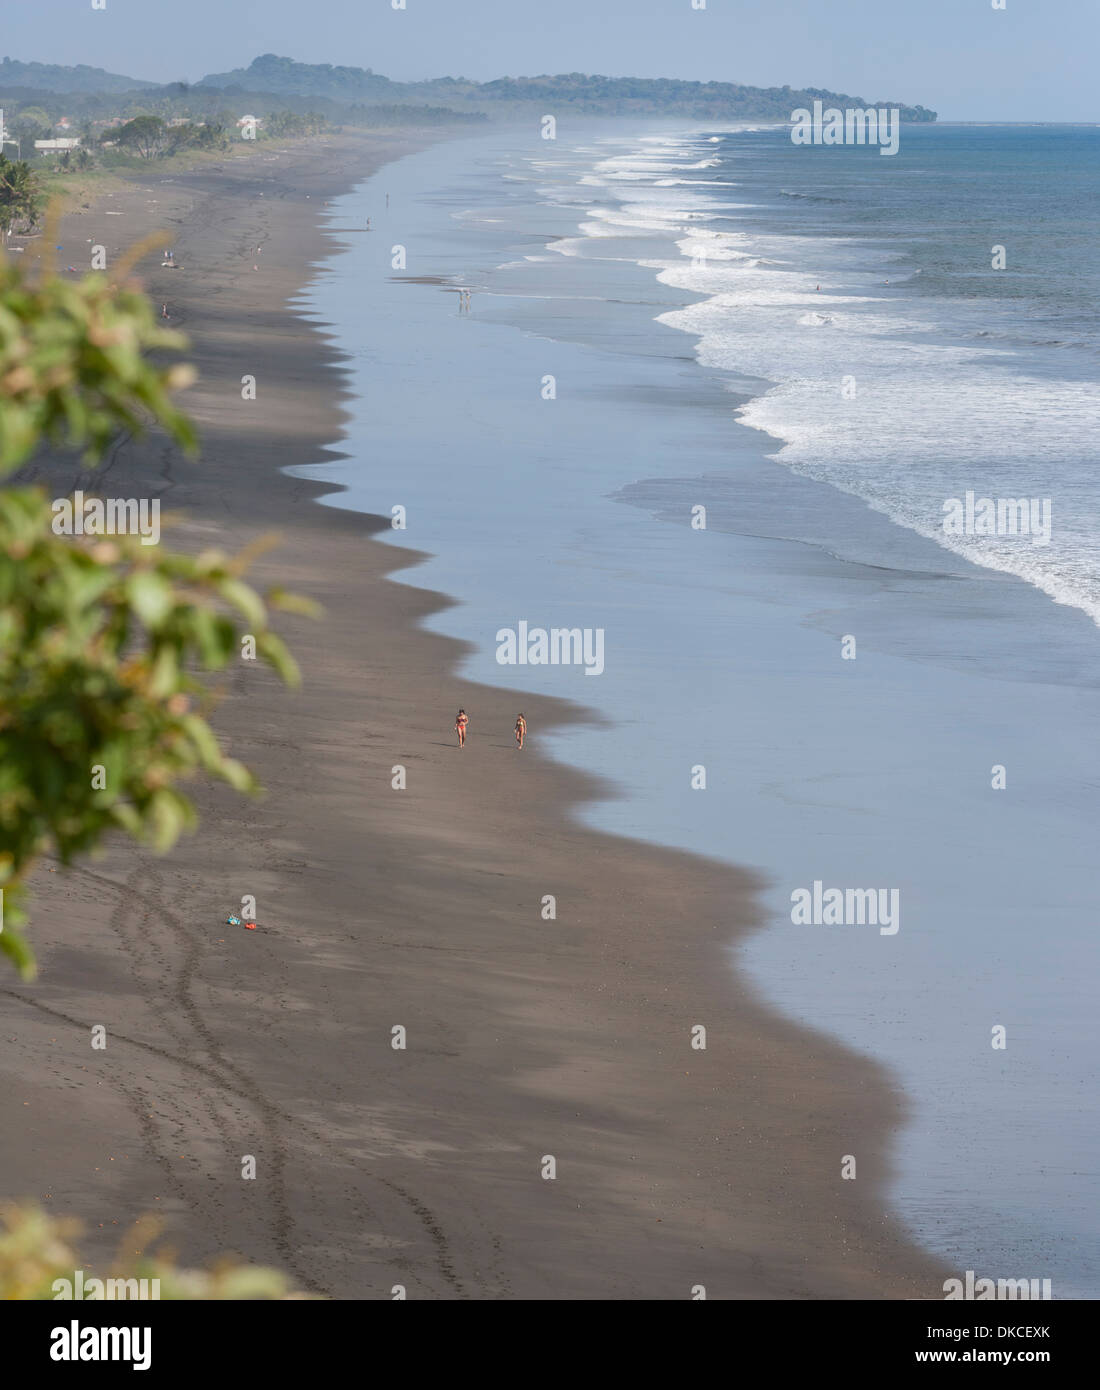 A long beach on Costa Rica's Pacific coast named Playa Hermosa. Stock Photo